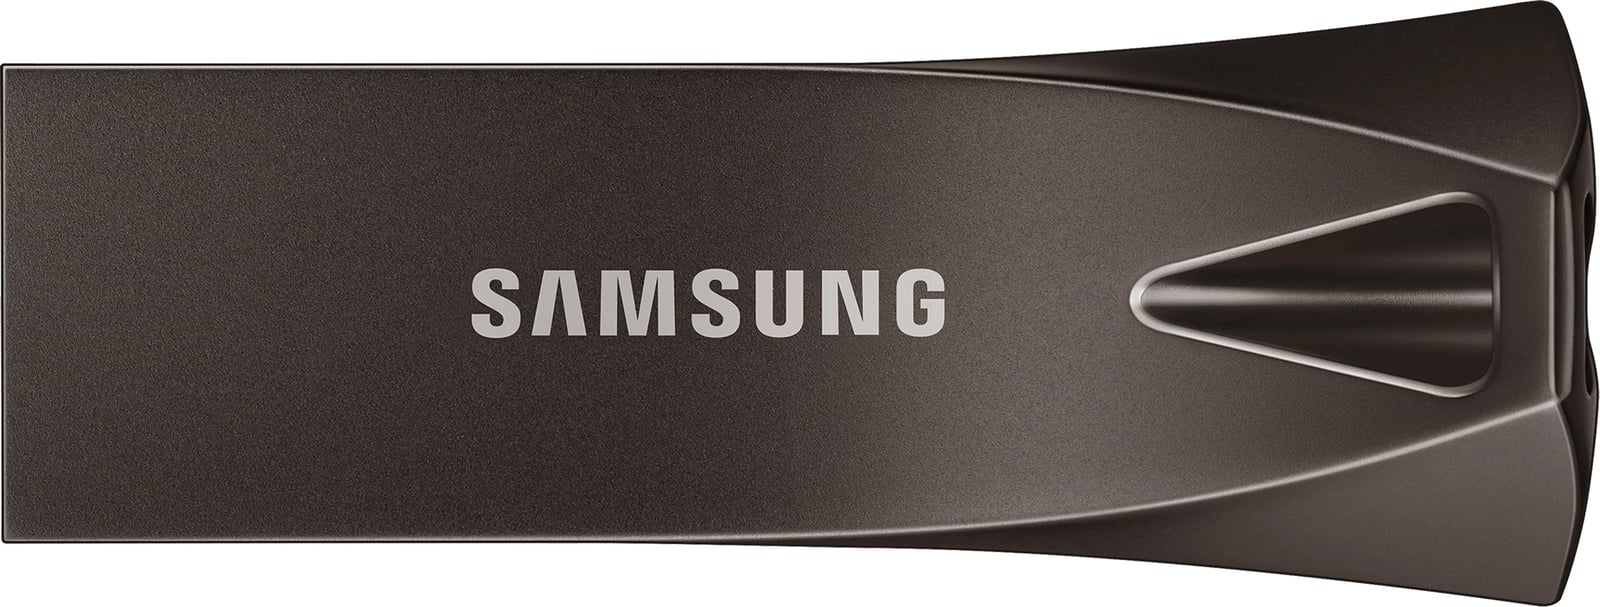 USB Samsung MUF-128BE4, 128 GB